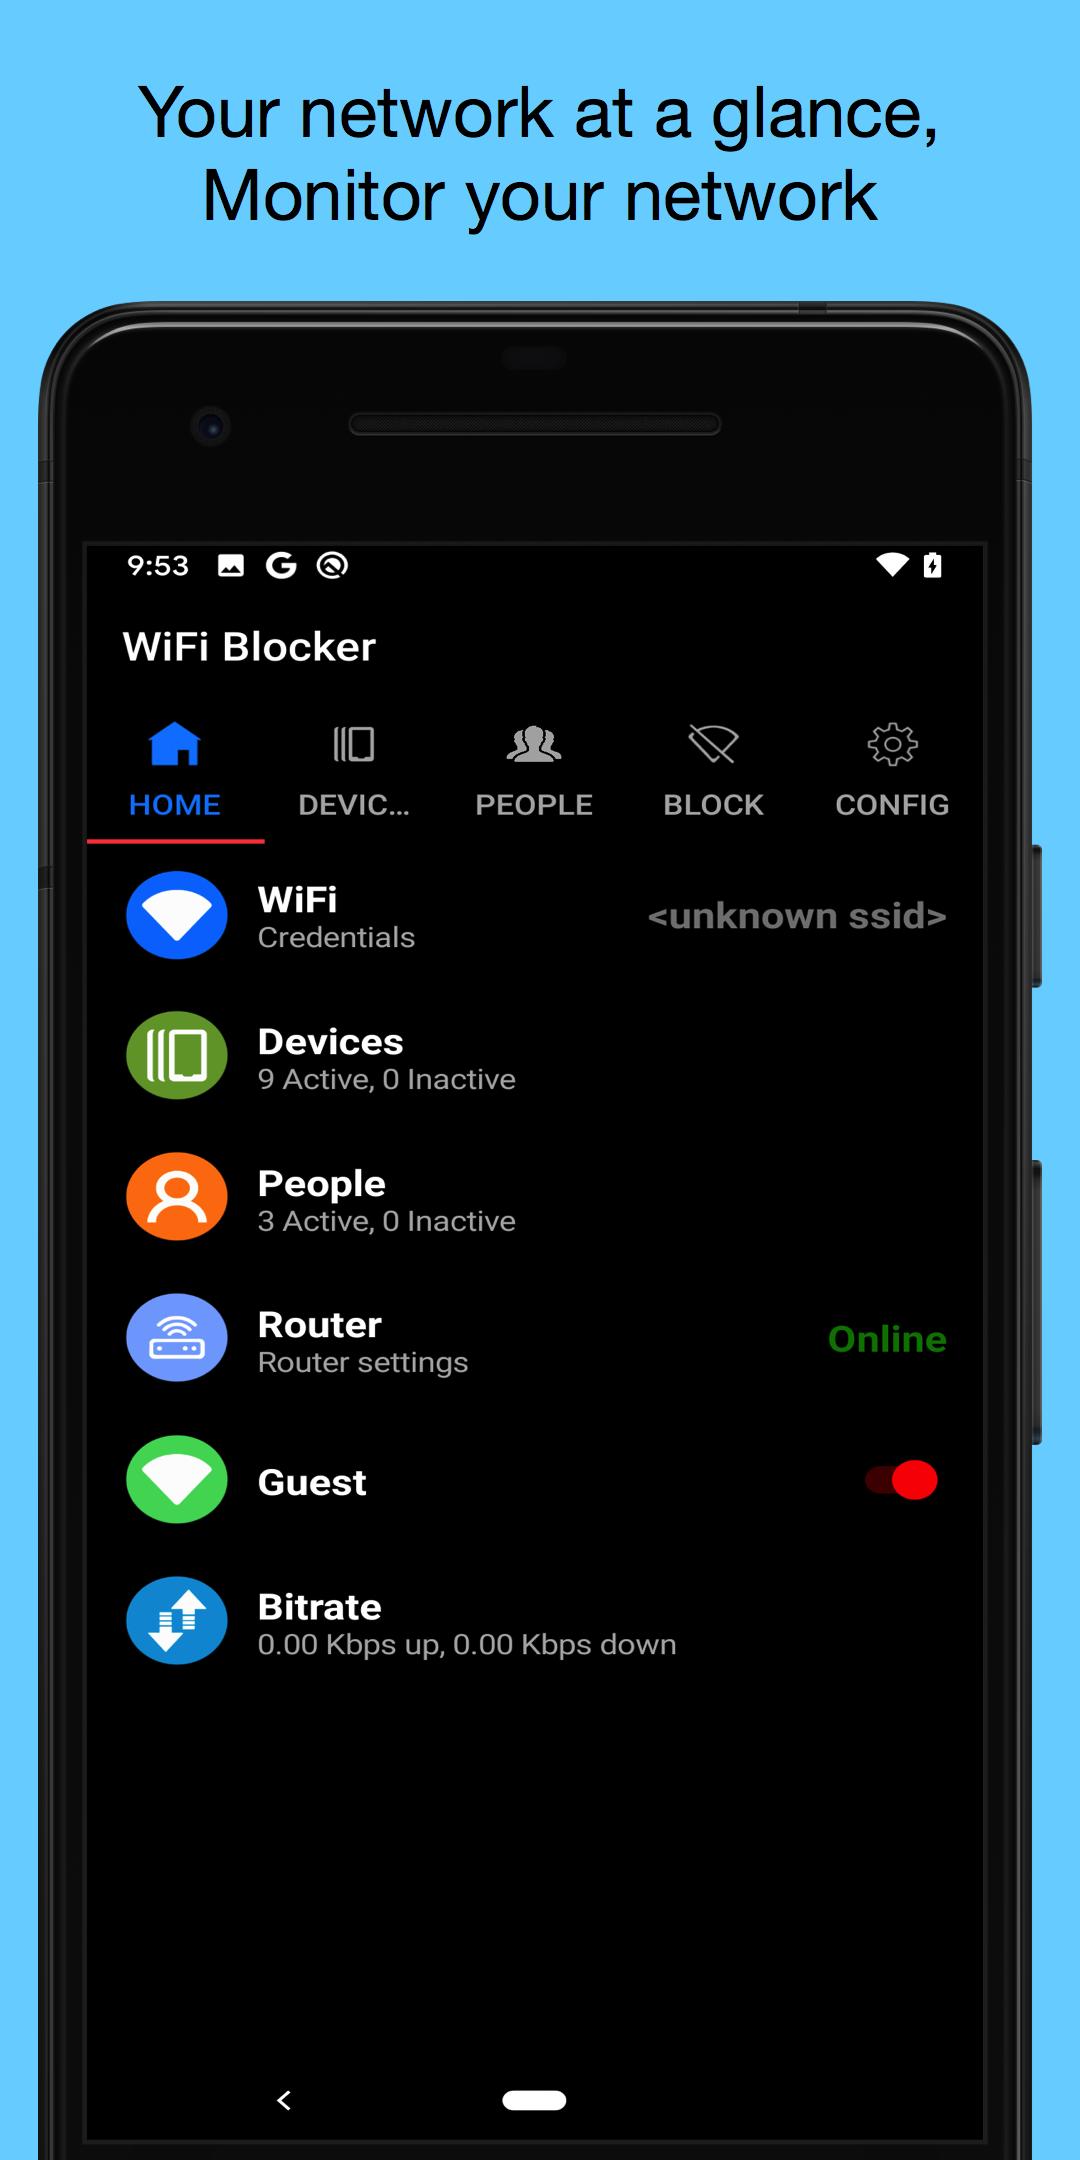 WiFi Blocker Router Parental Control -Block WiFi 2.7.0.0407 Screenshot 7